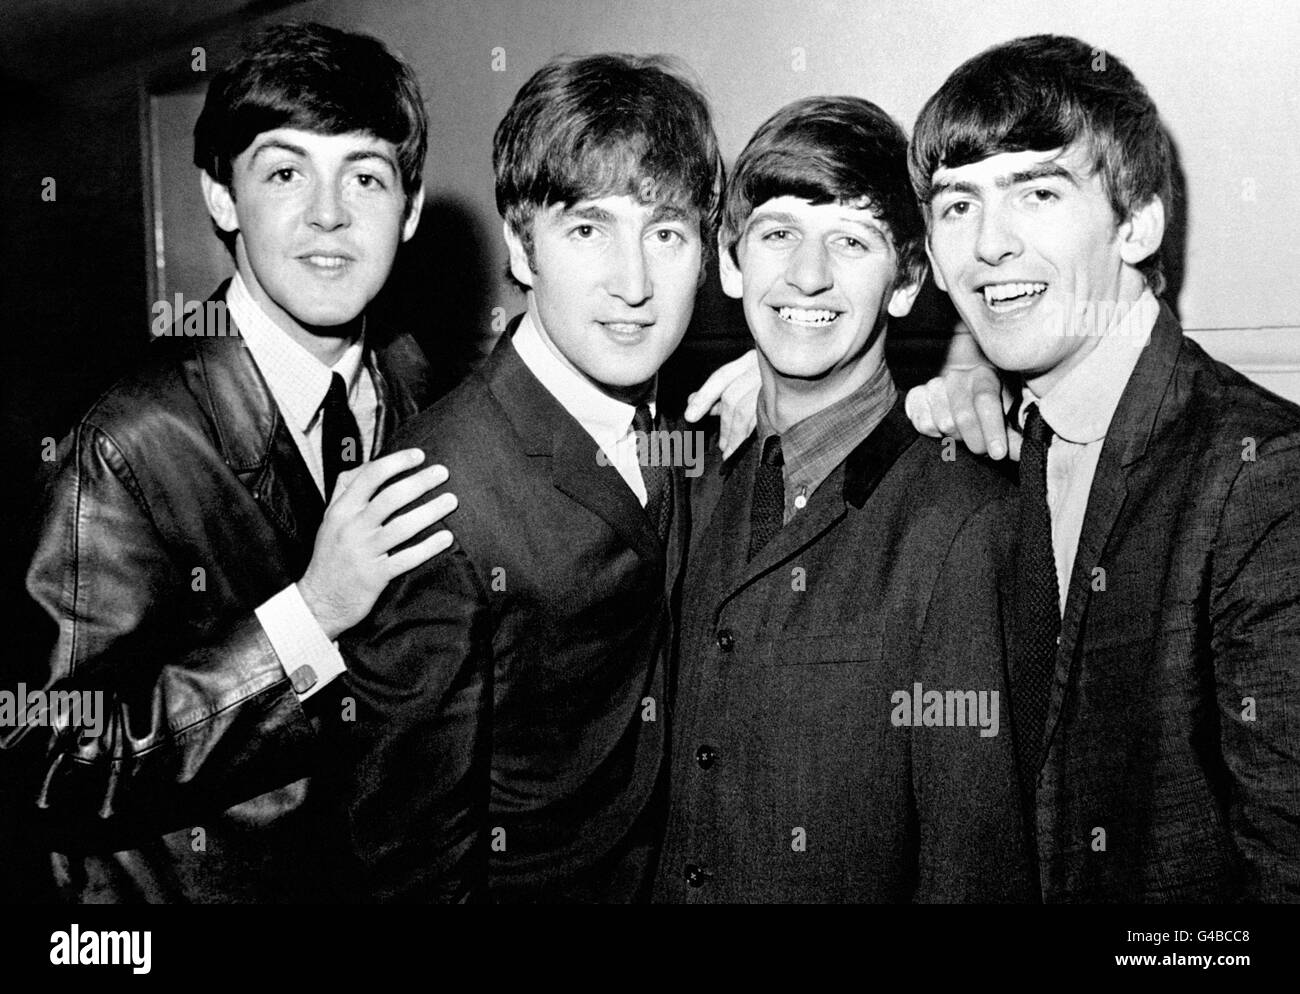 The Beatles pop group, left to right, Paul McCartney, John Lennon, Ringo Starr and George Harrison. Stock Photo